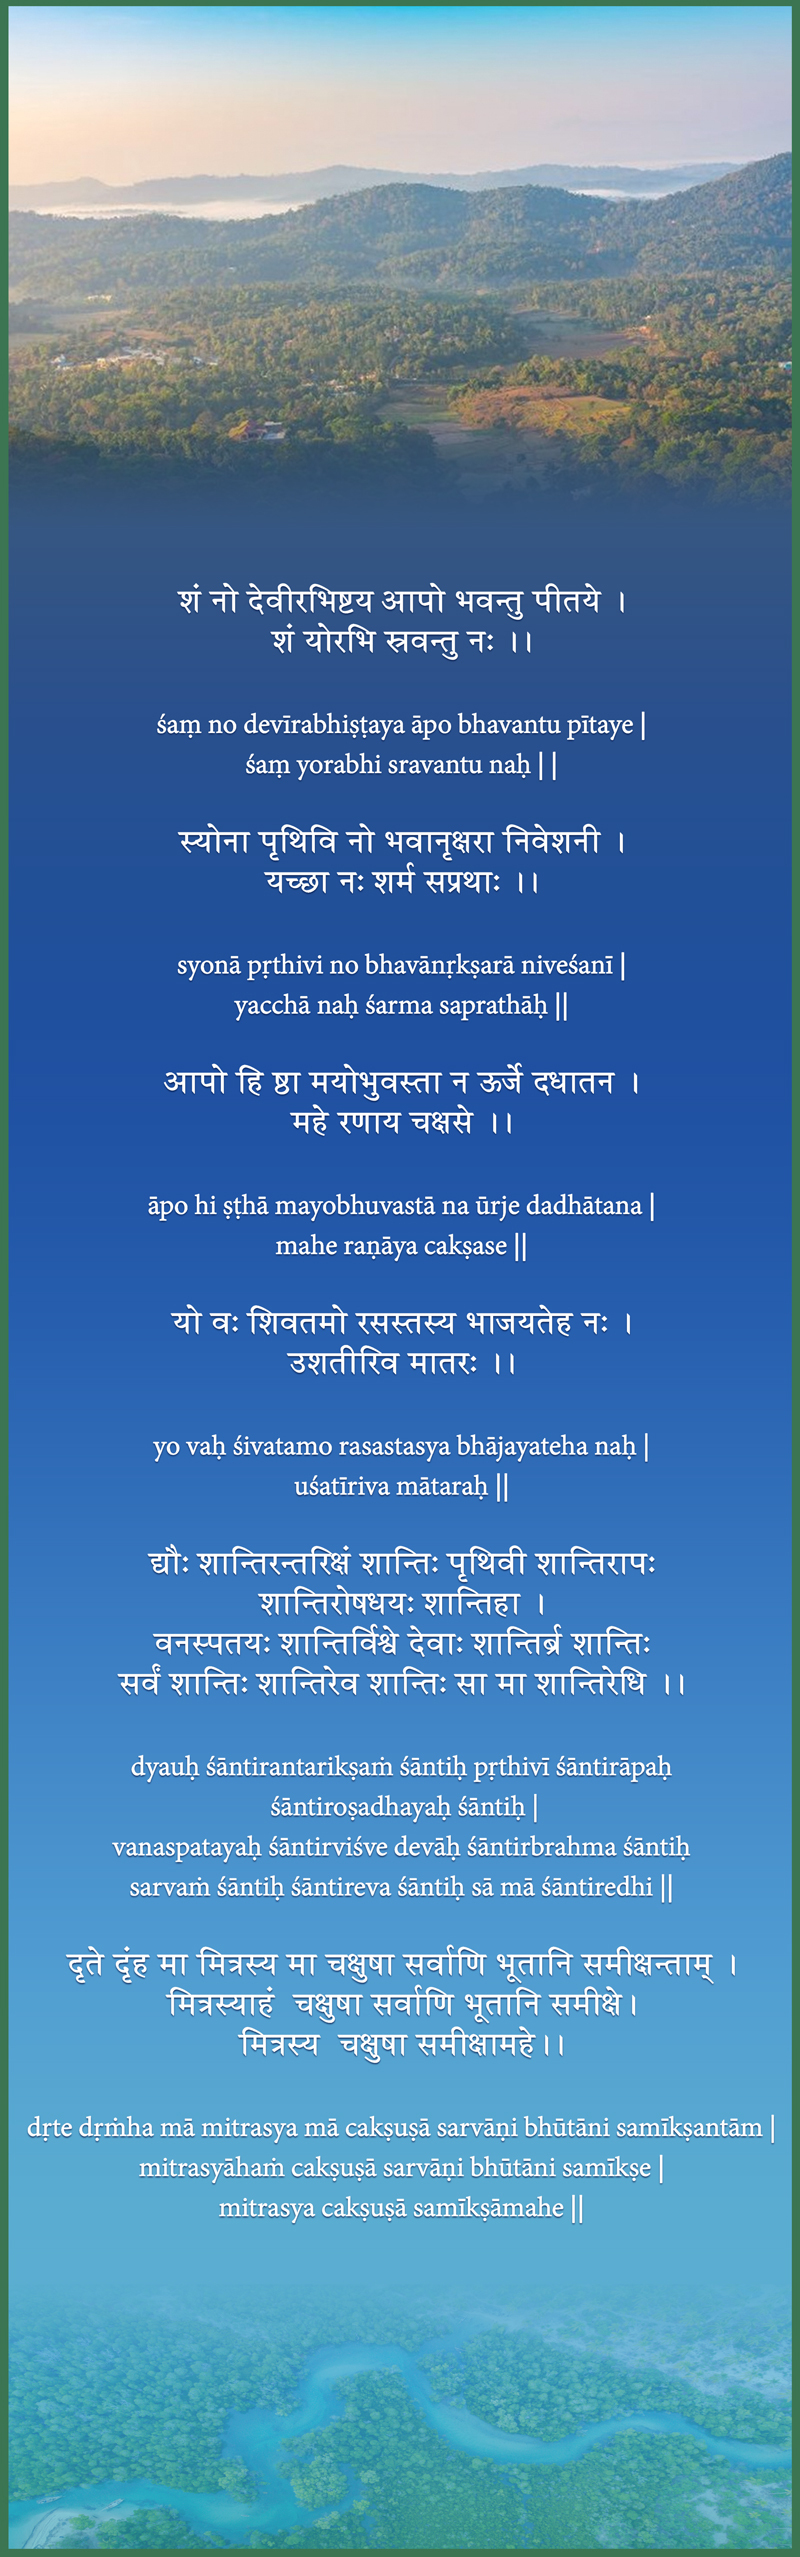 Verse from Shukla Yajur Veda